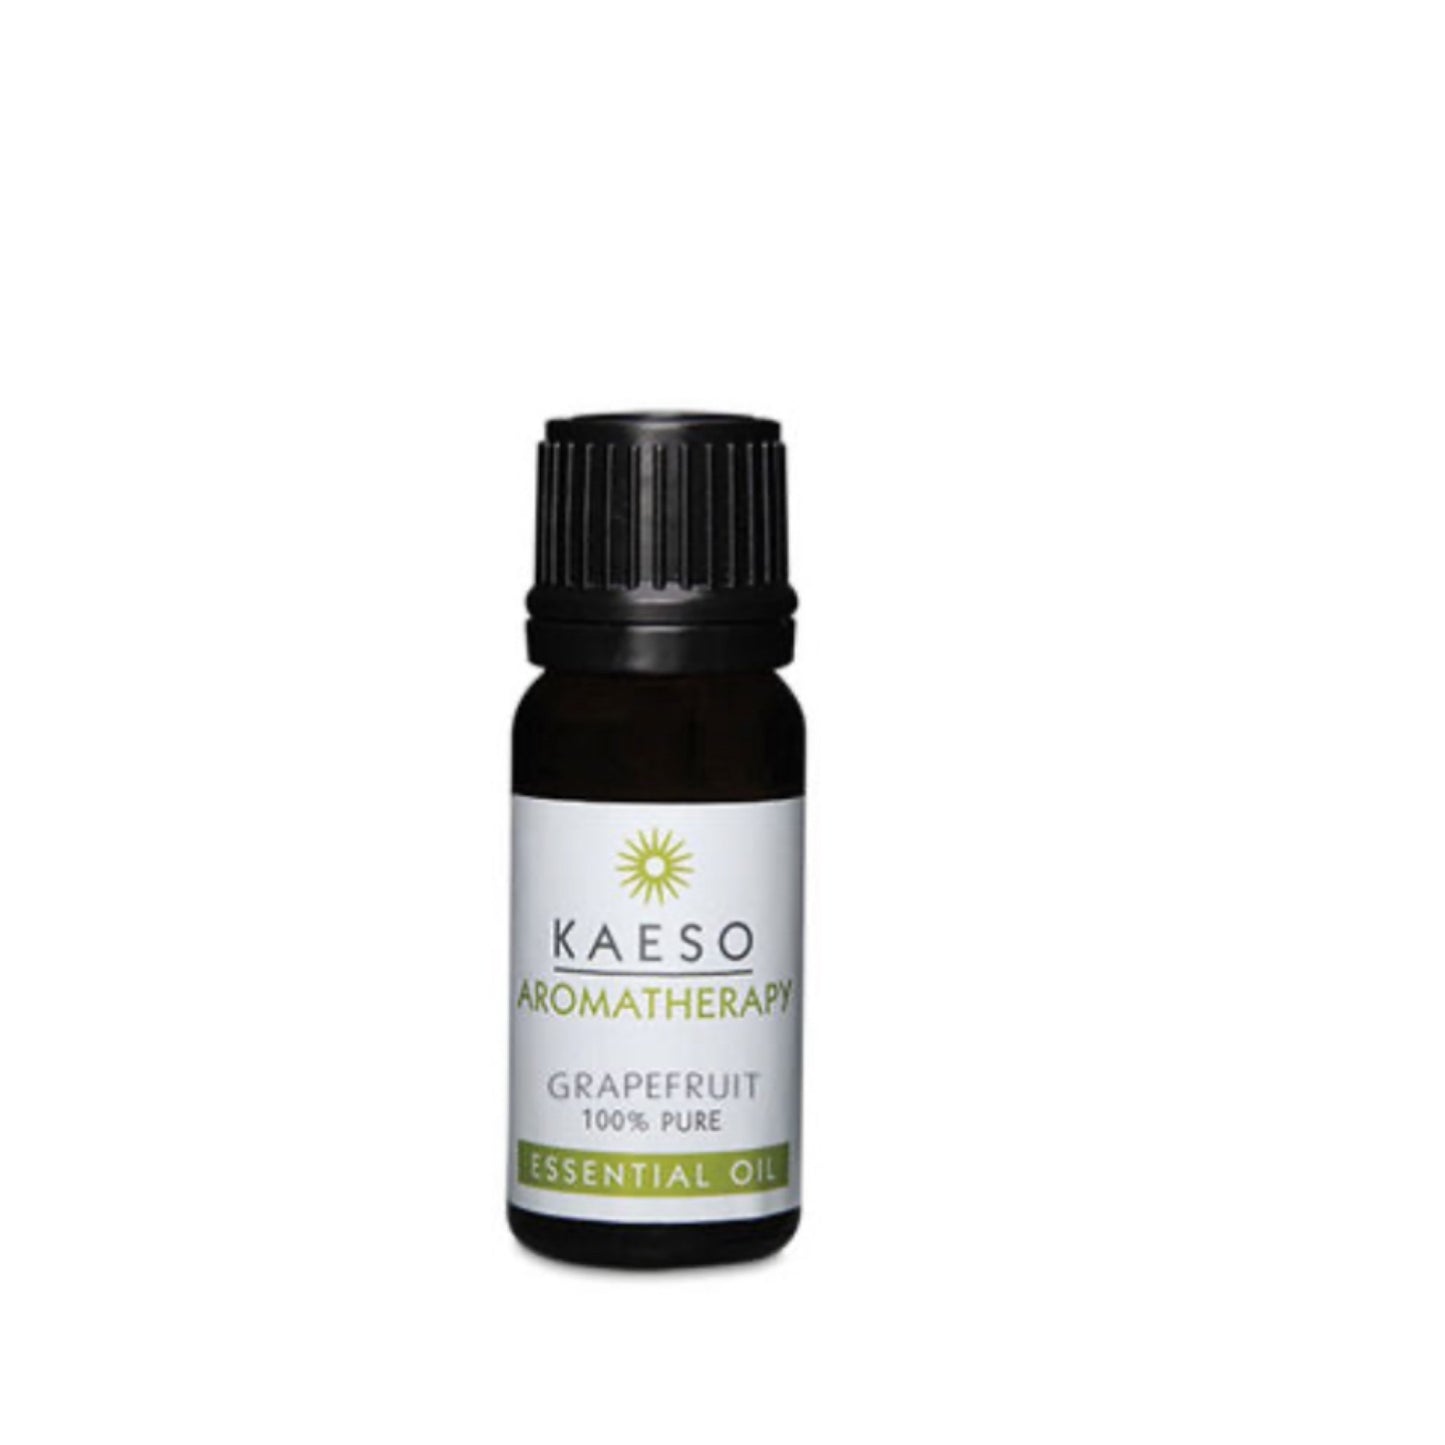 Kaeso Aromatherapy - Grapefruit Essential Oil (10ml